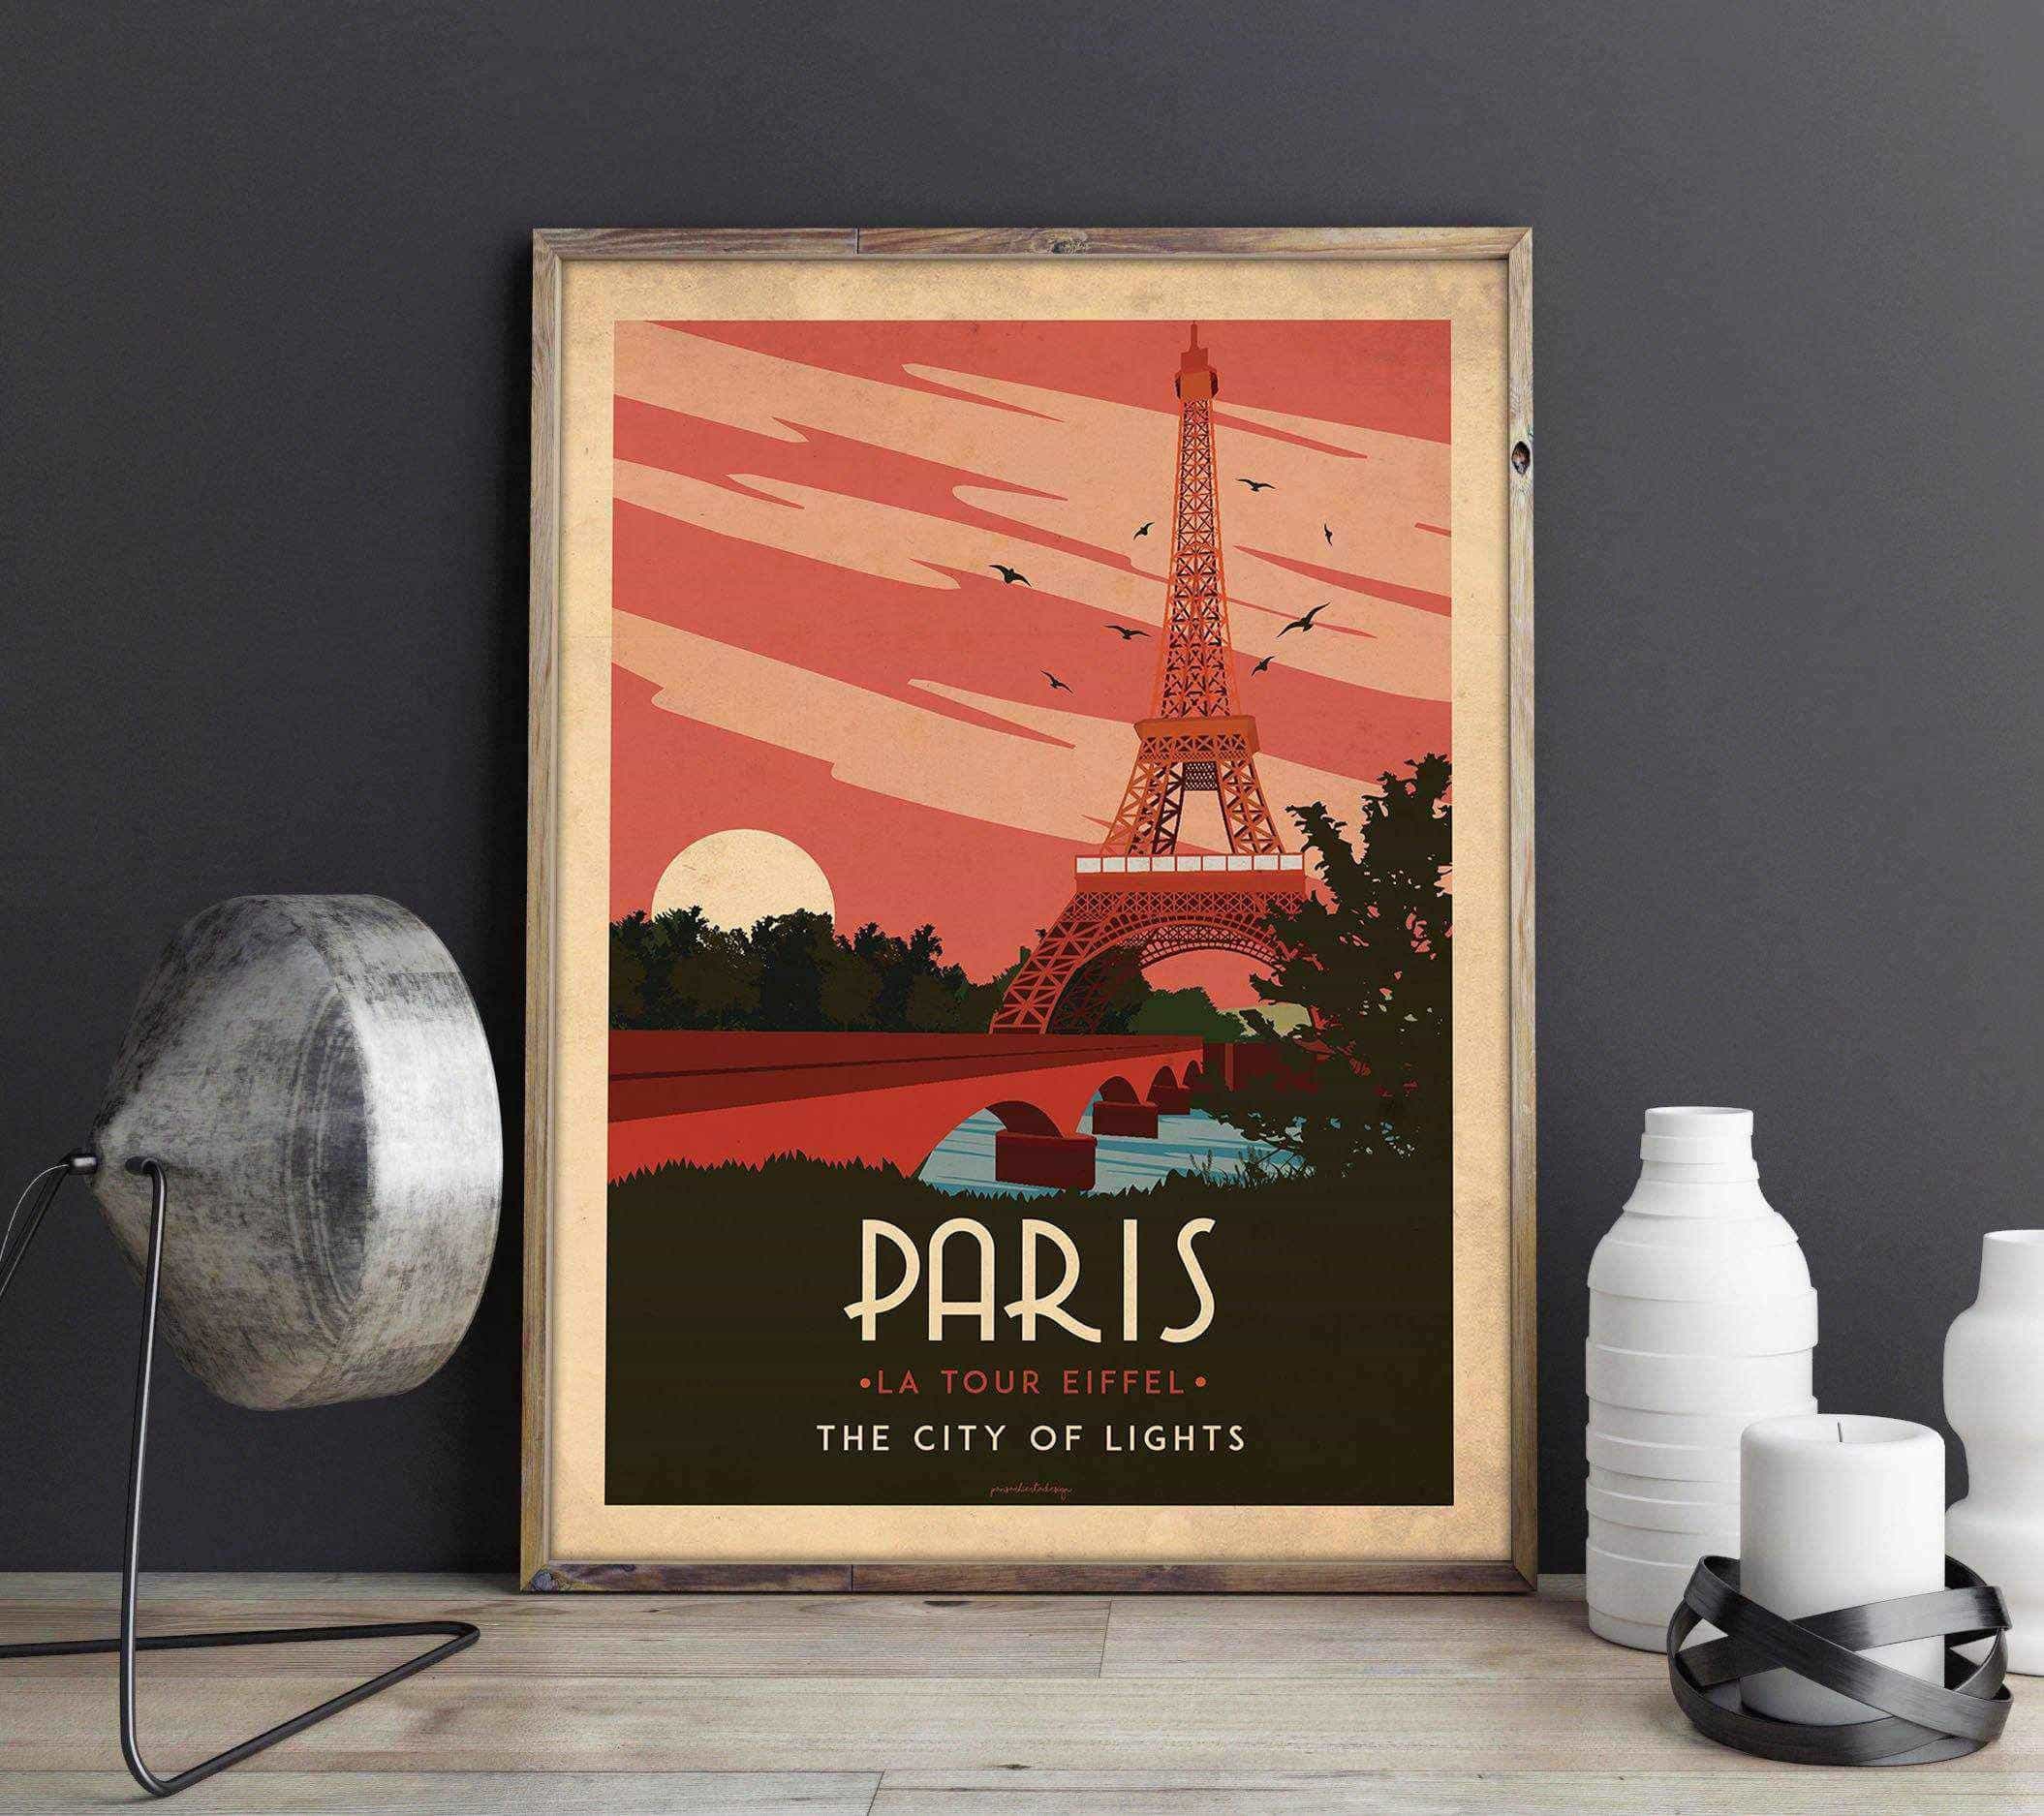 Art deco - Paris - World collection Posters, affischer, tavlor Pansarhierta